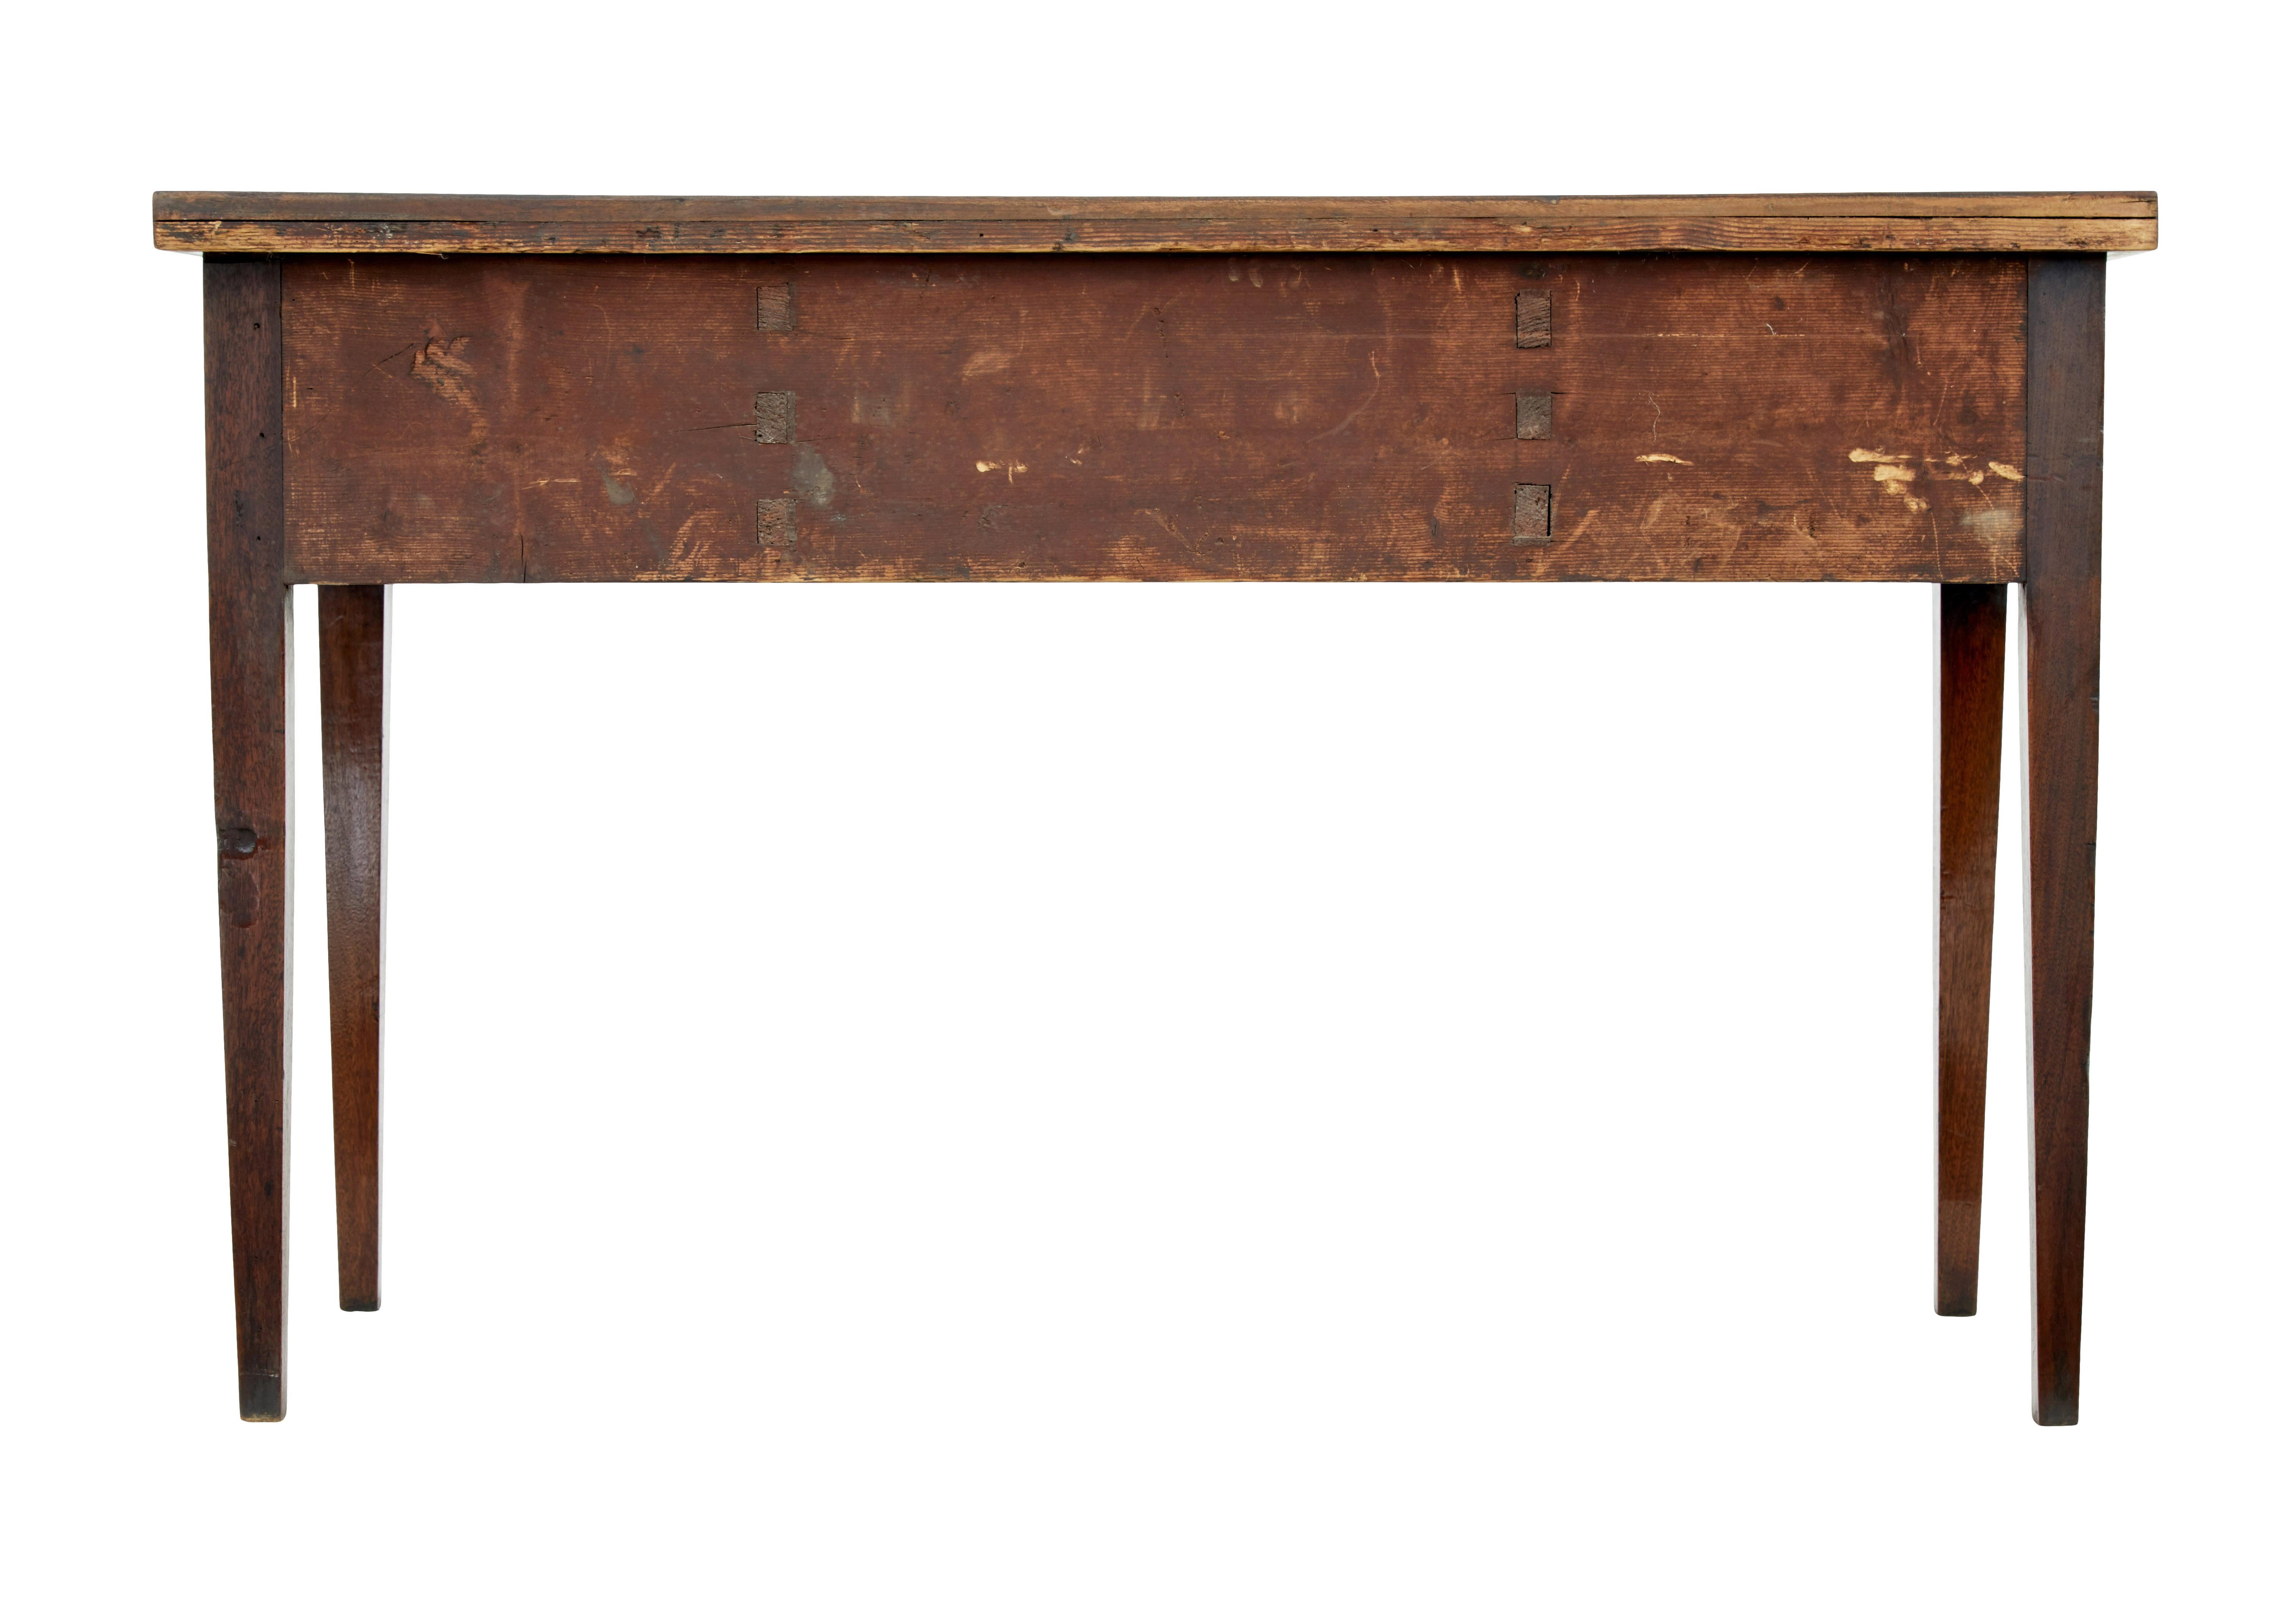 English Mid 19th century mahogany bowfront sideboard